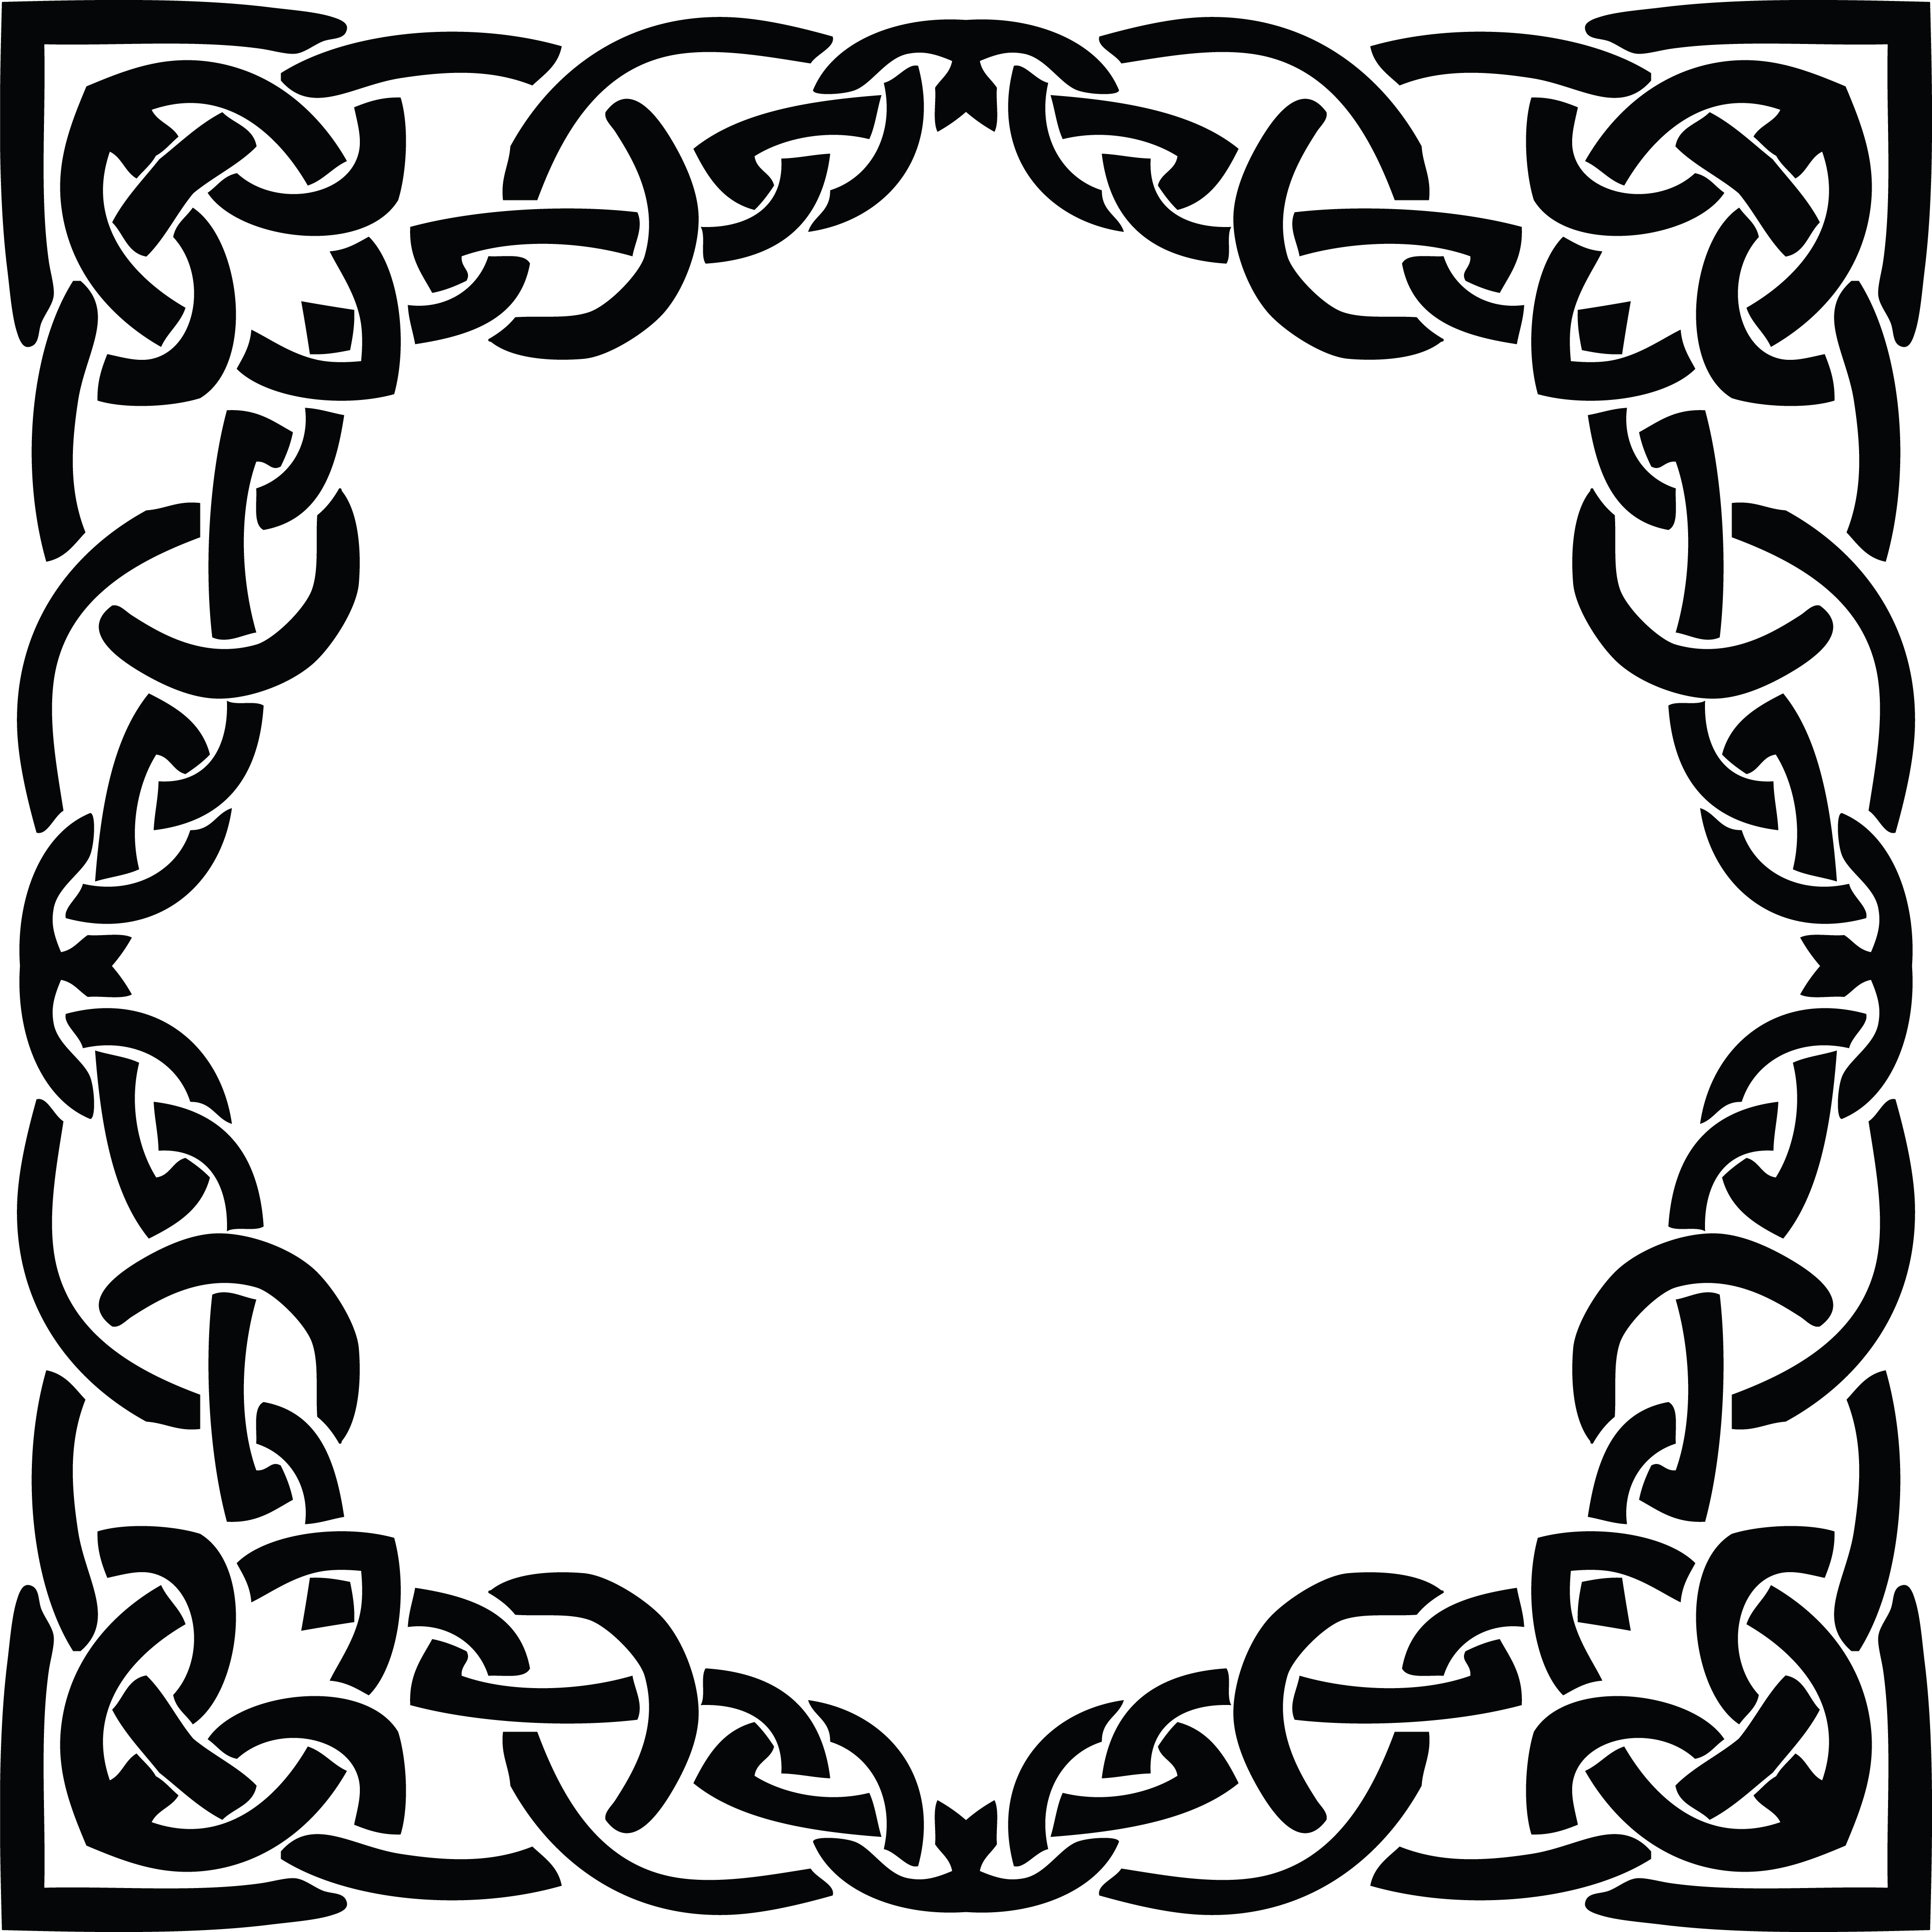 Free Clipart of a celtic  frame  border  design element in 